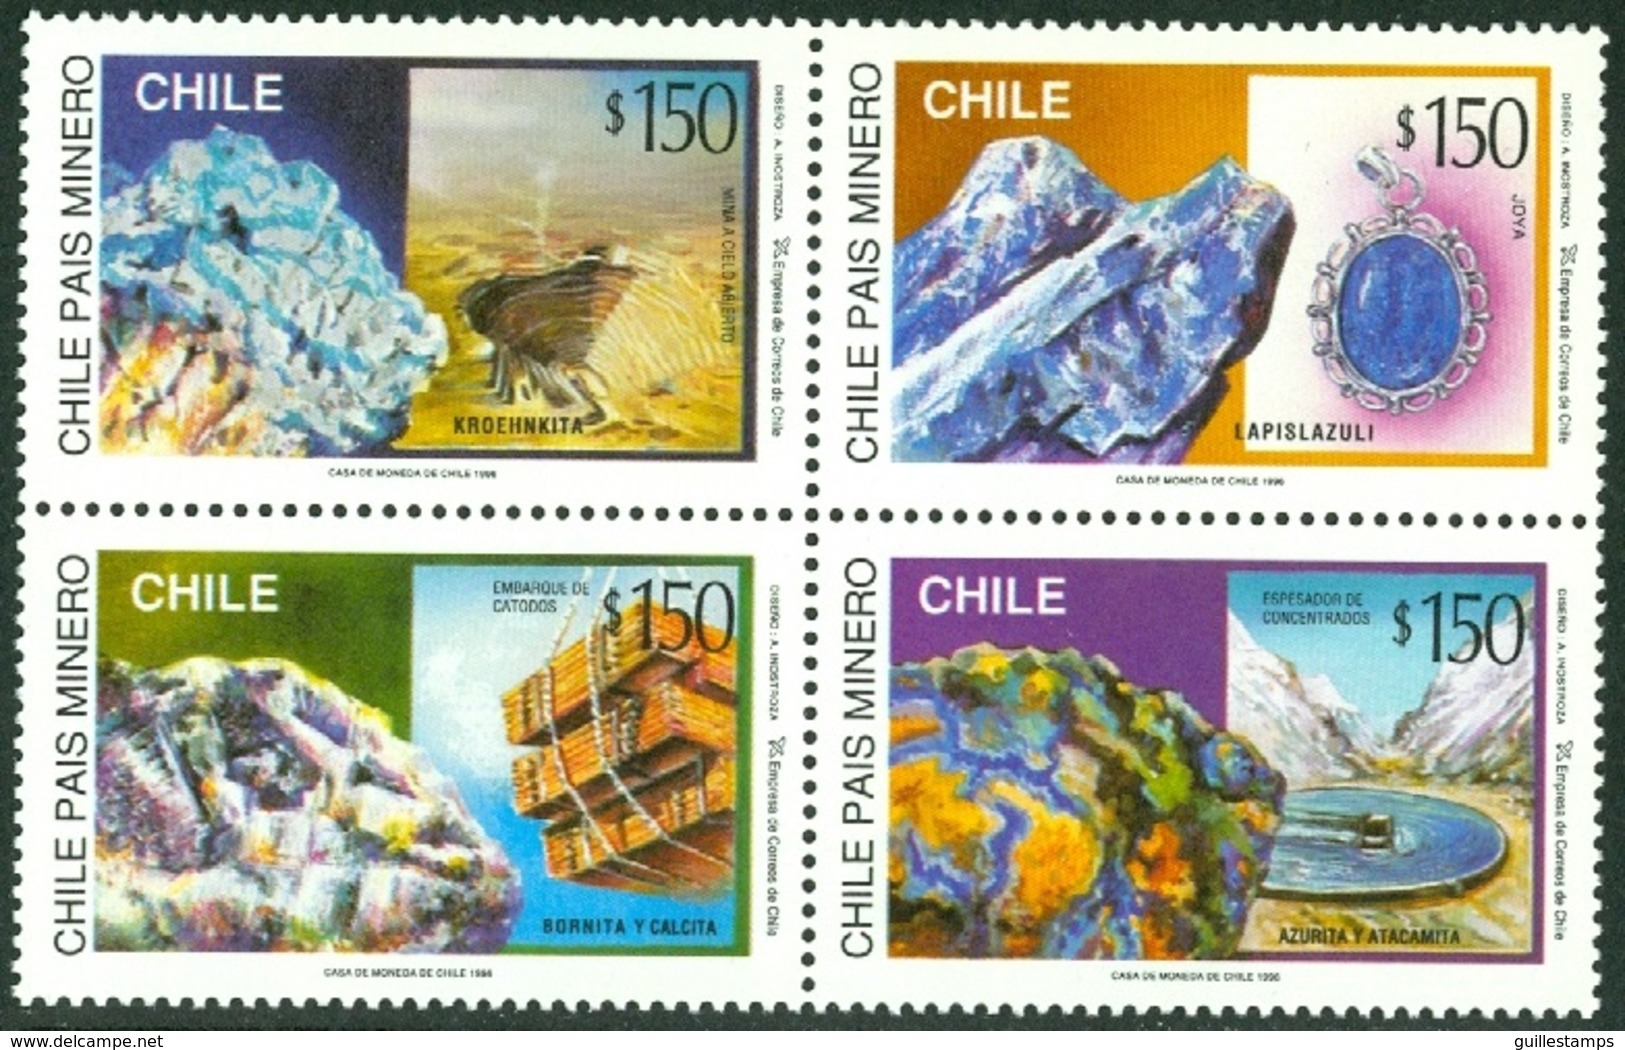 CHILE 1996 MINERALS BLOCK OF 4** (MNH) - Chili